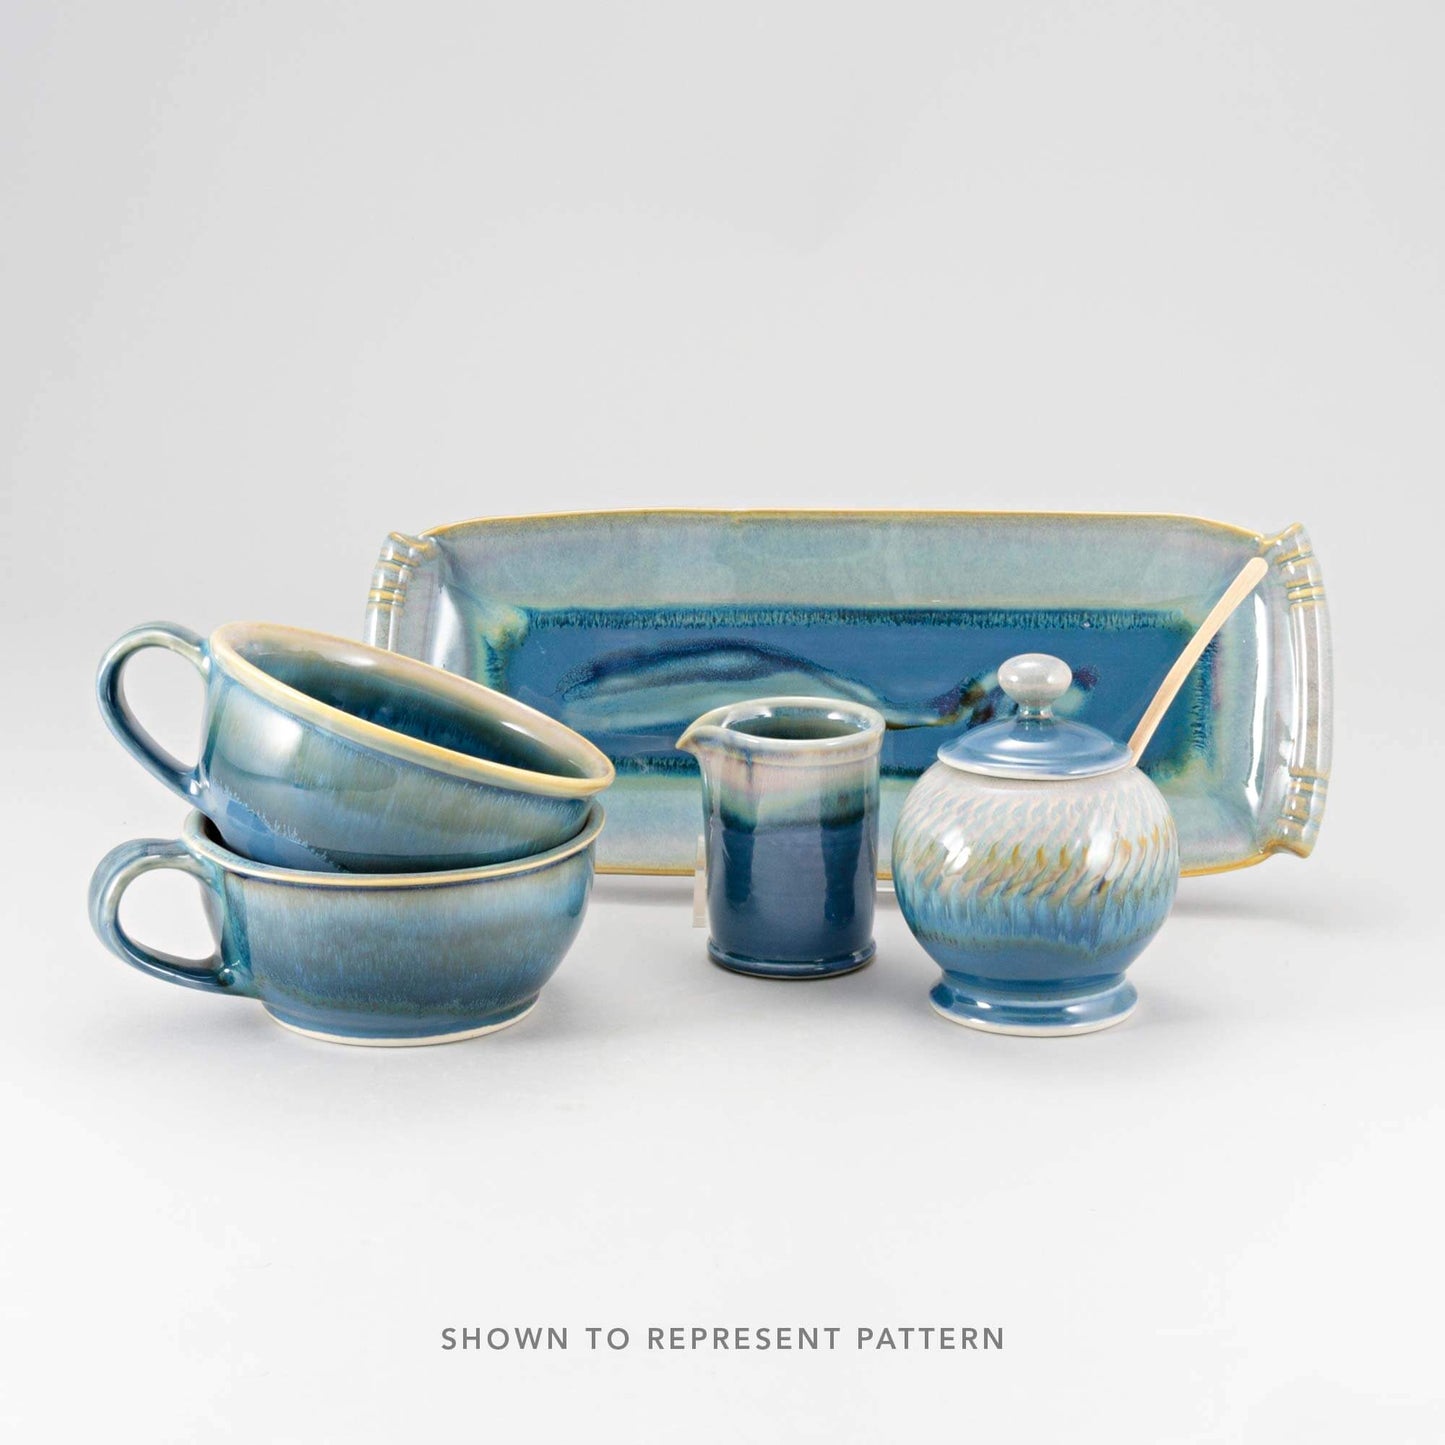 Handmade Pottery Handled Ramekin in Blue Oribe pattern made by Georgetown Pottery in Maine